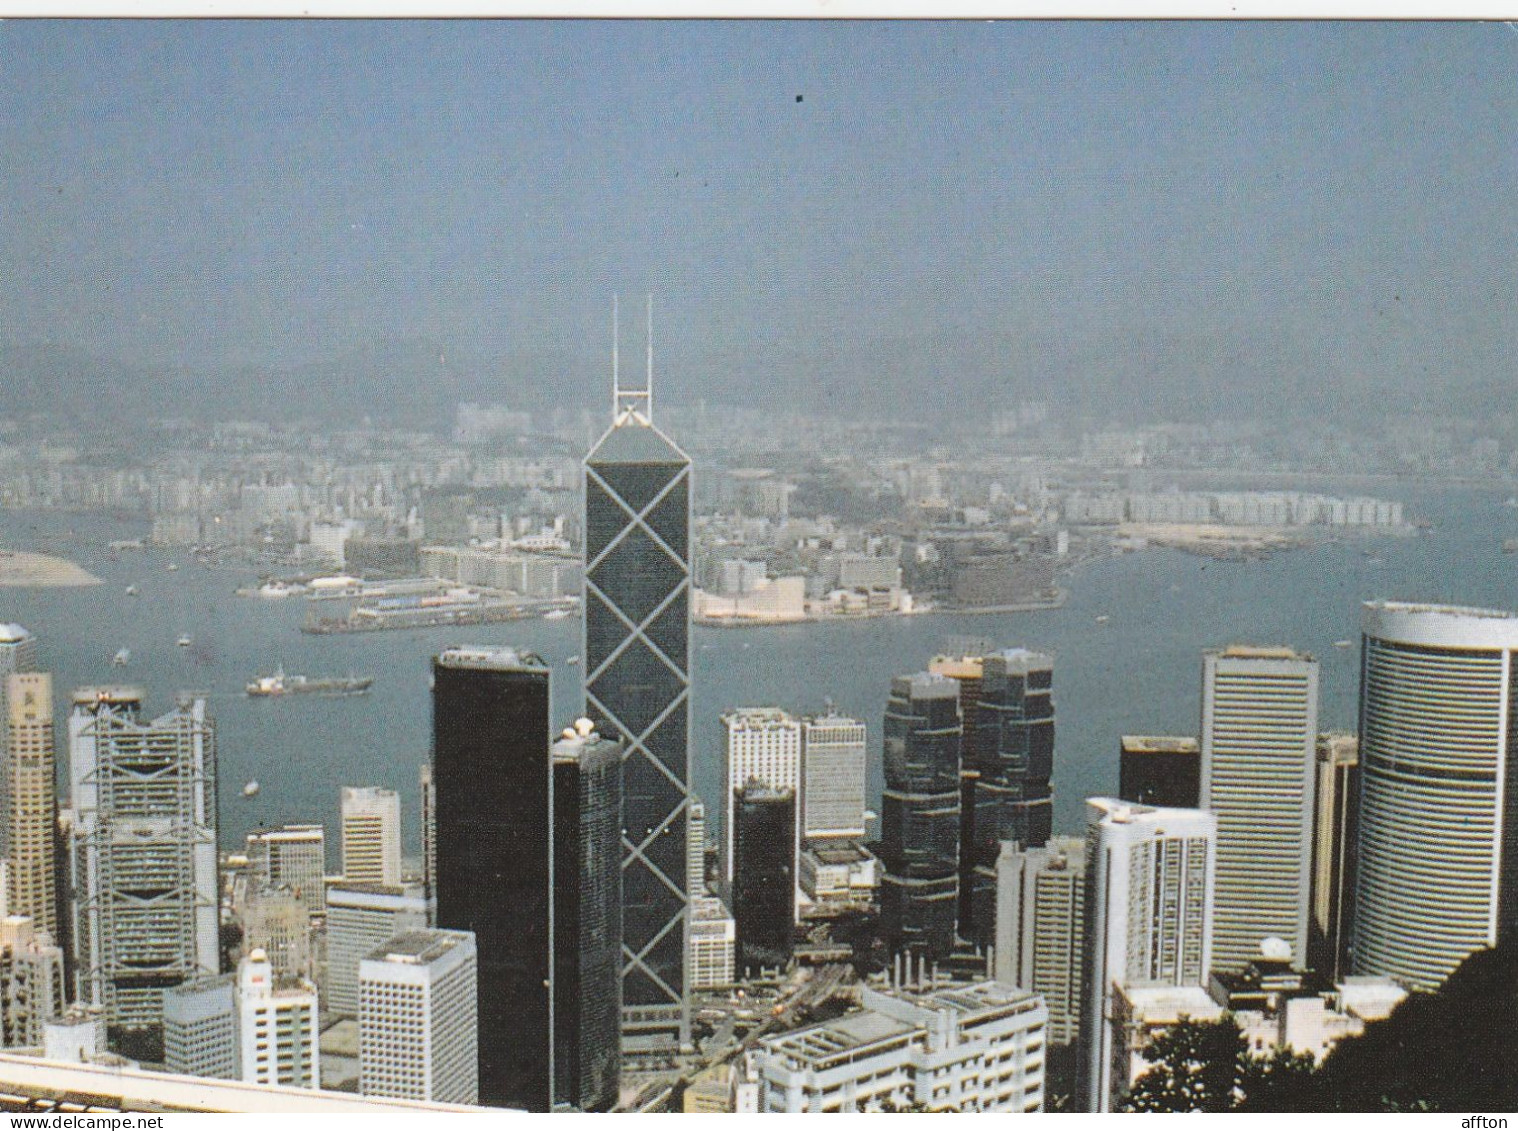 Hong Kong 1993 FDC On Postcard - FDC